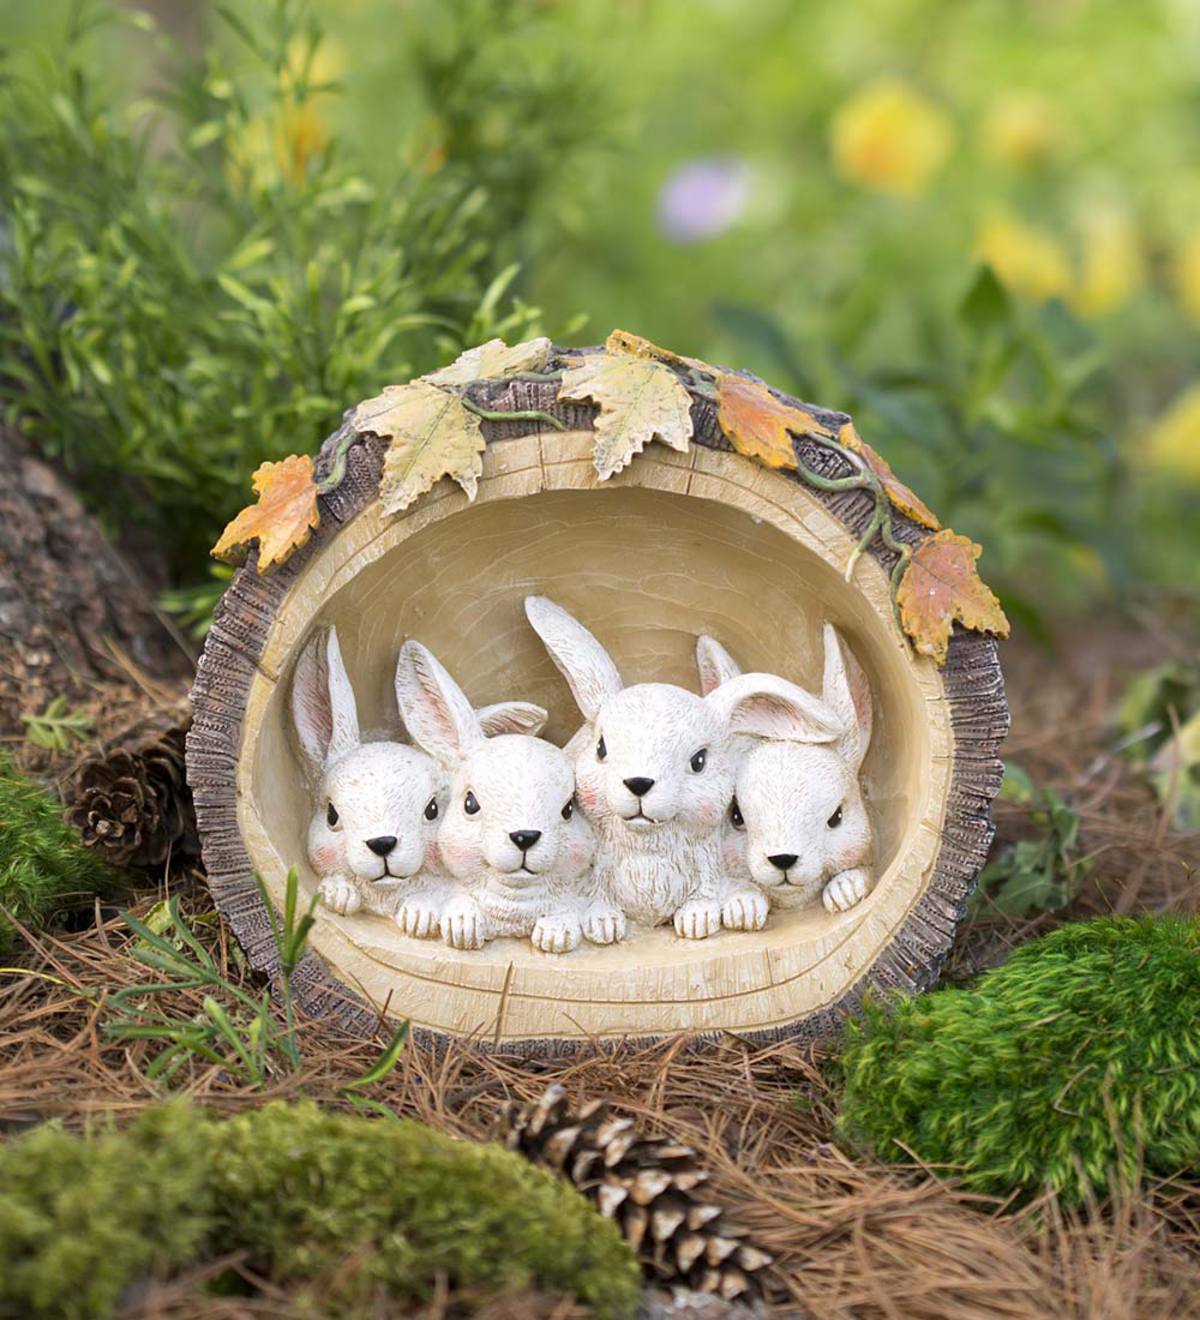 Bunnies in a Log Figurine